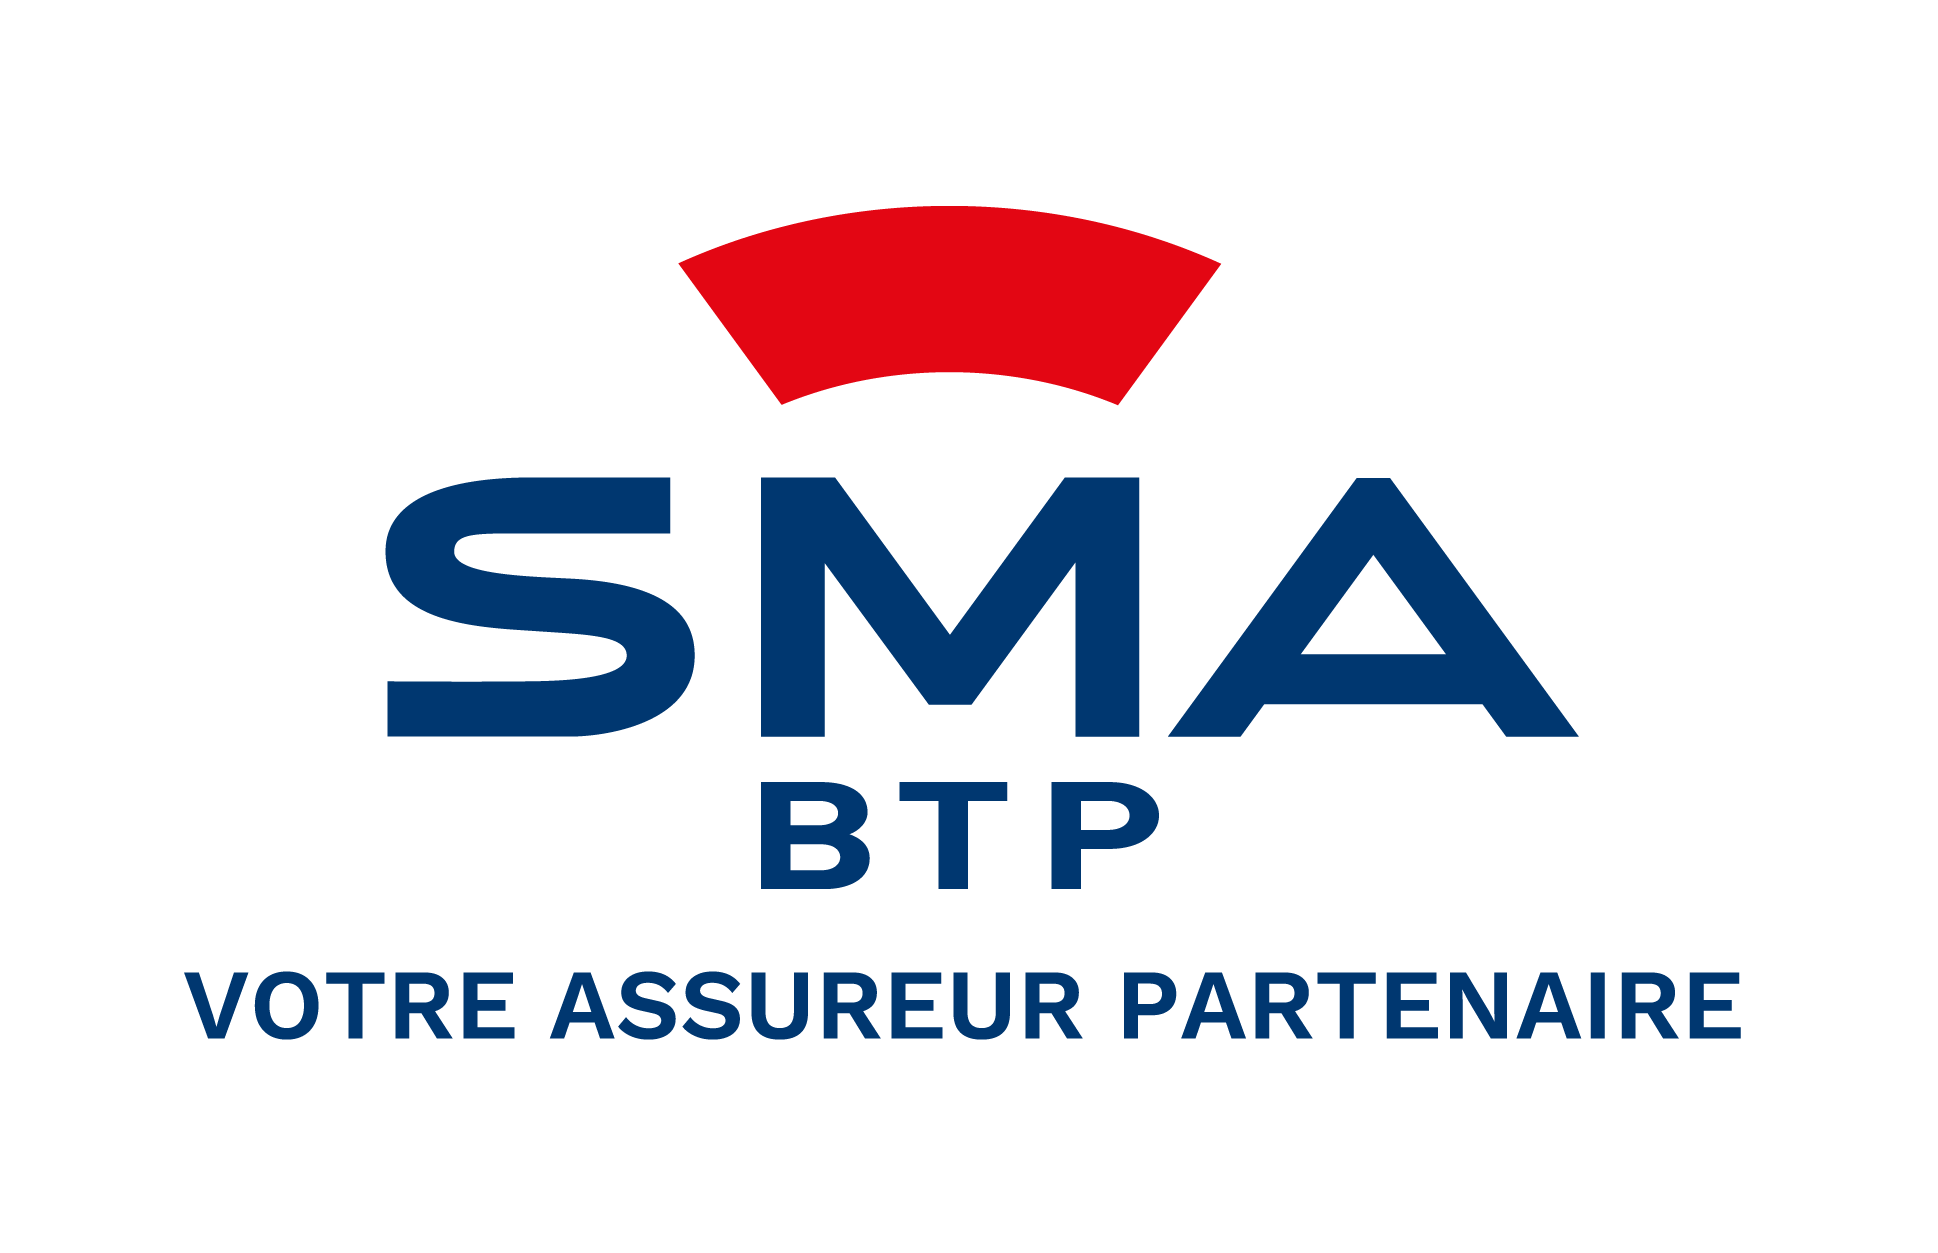 SMABTP_SIGNATURE_COULEUR